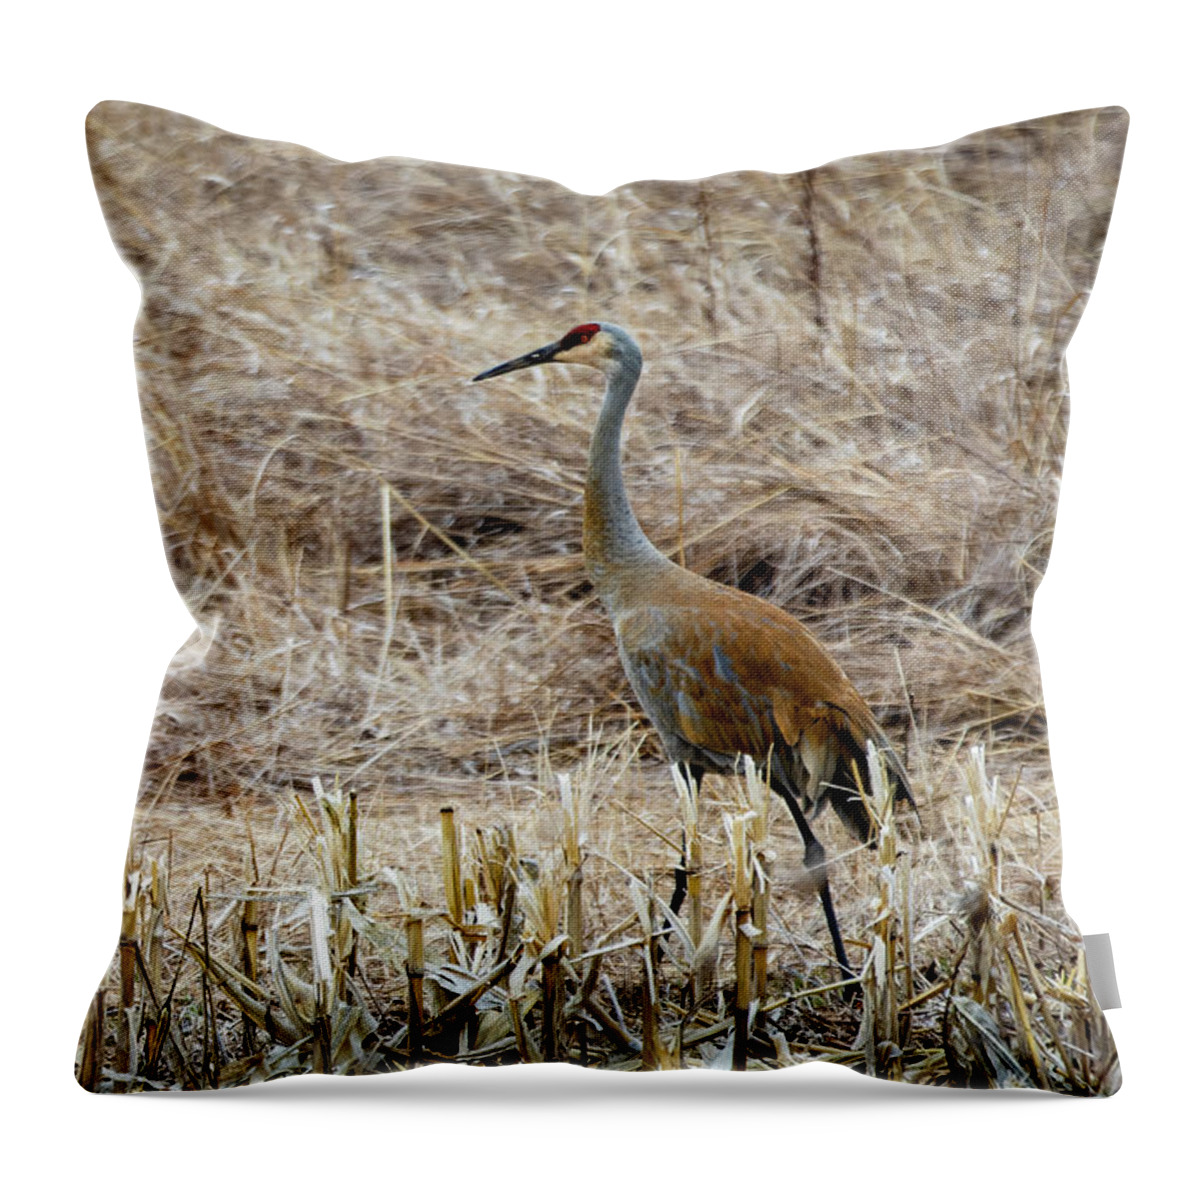 Sandhill Cranes Throw Pillow featuring the photograph Sandhill Cranes by Josh Bryant